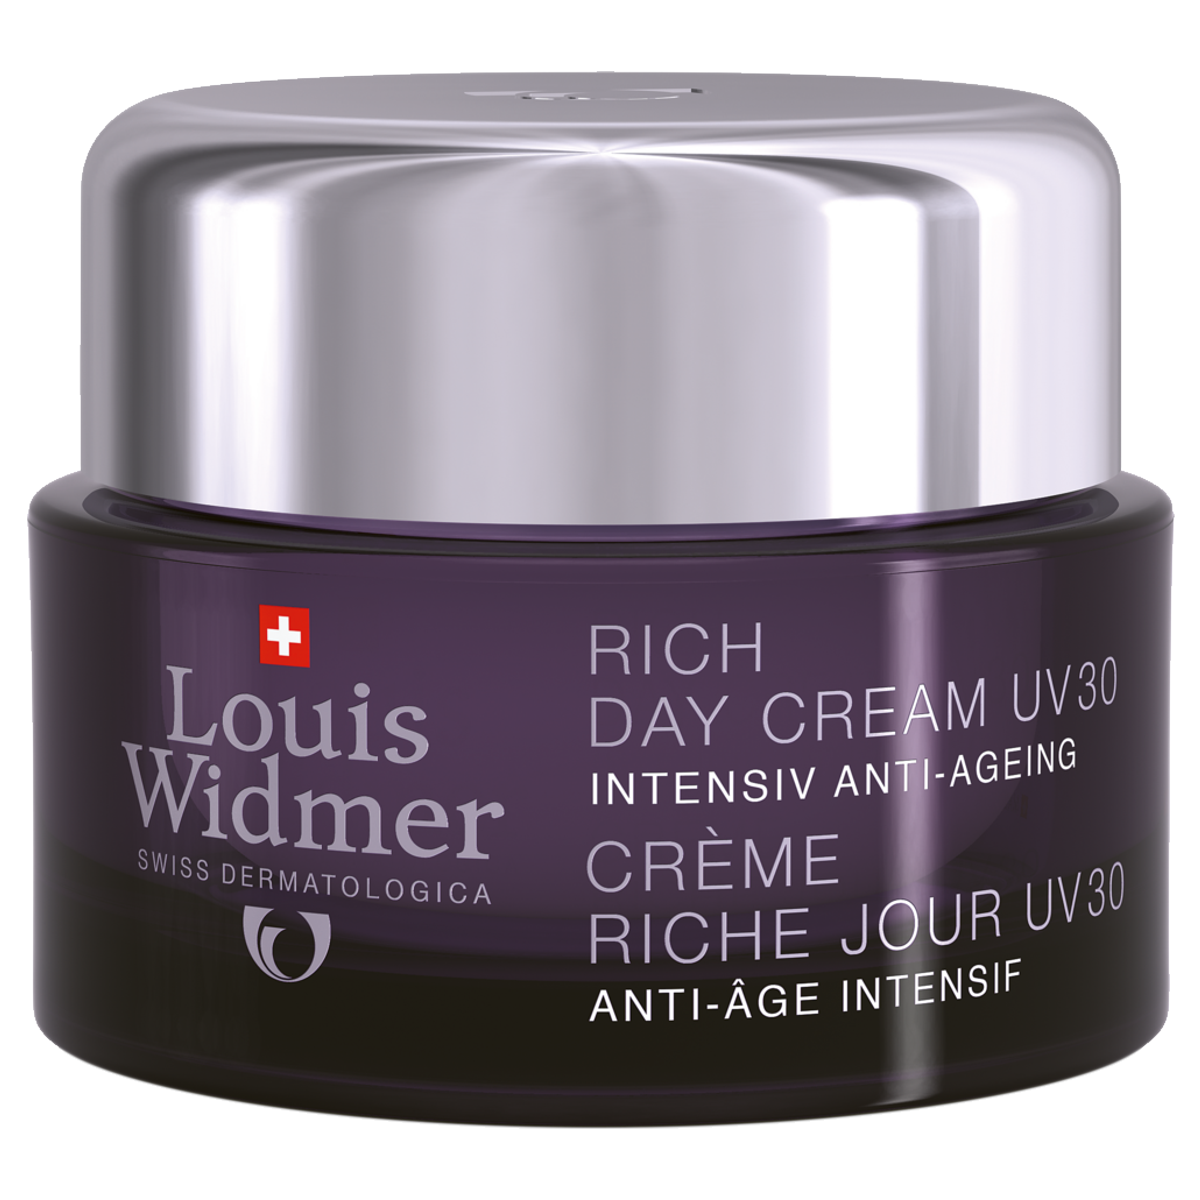 Louis Widmer Rich Day Cream UV30 parfümiert 50 ml